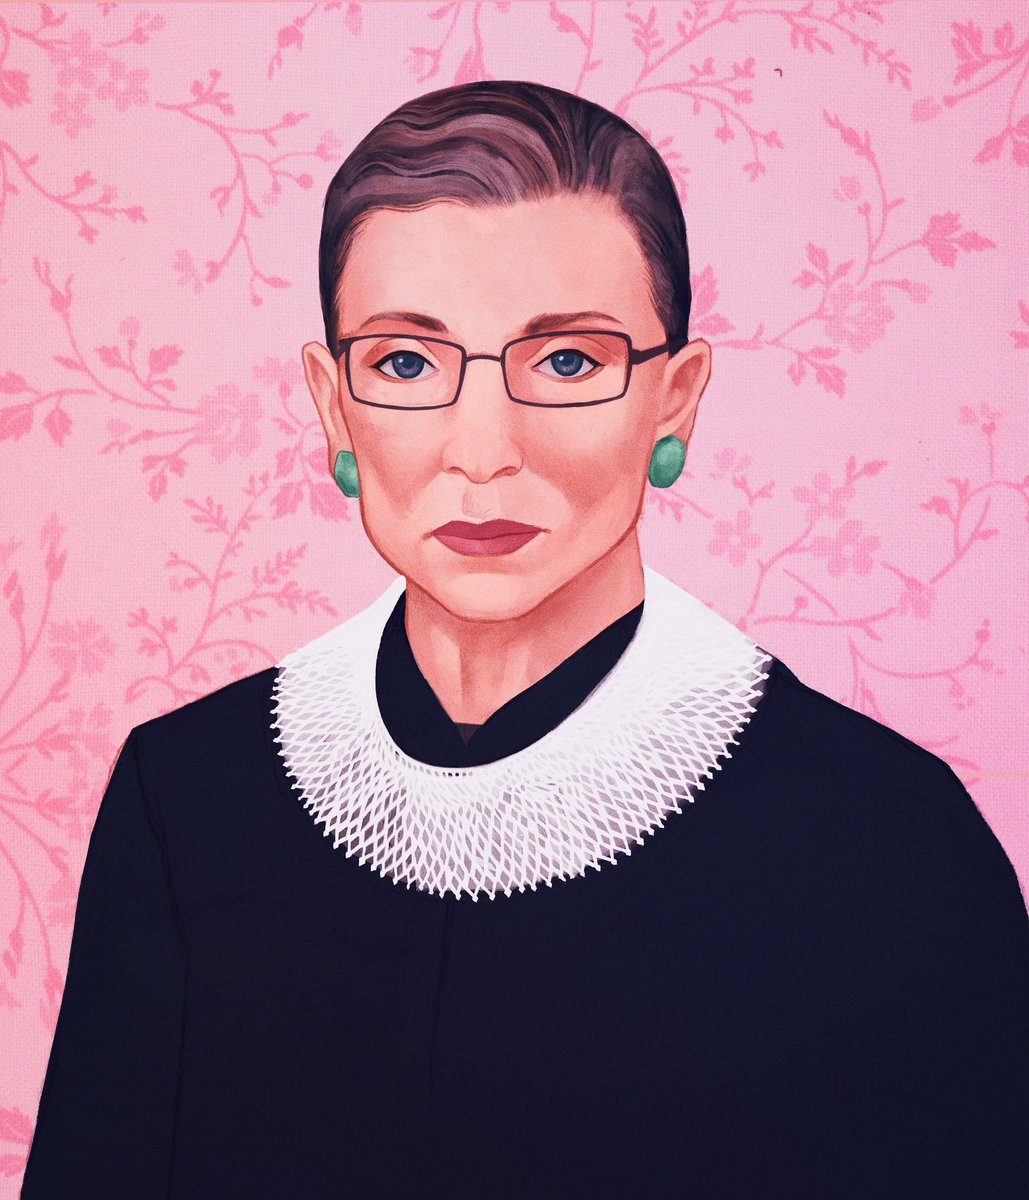 #RBG #Illustration #portraitillustration #portrait #RuthBaderGinsberg #riseupshowupunite #votehimout #womenwithpencils #womenwhodraw